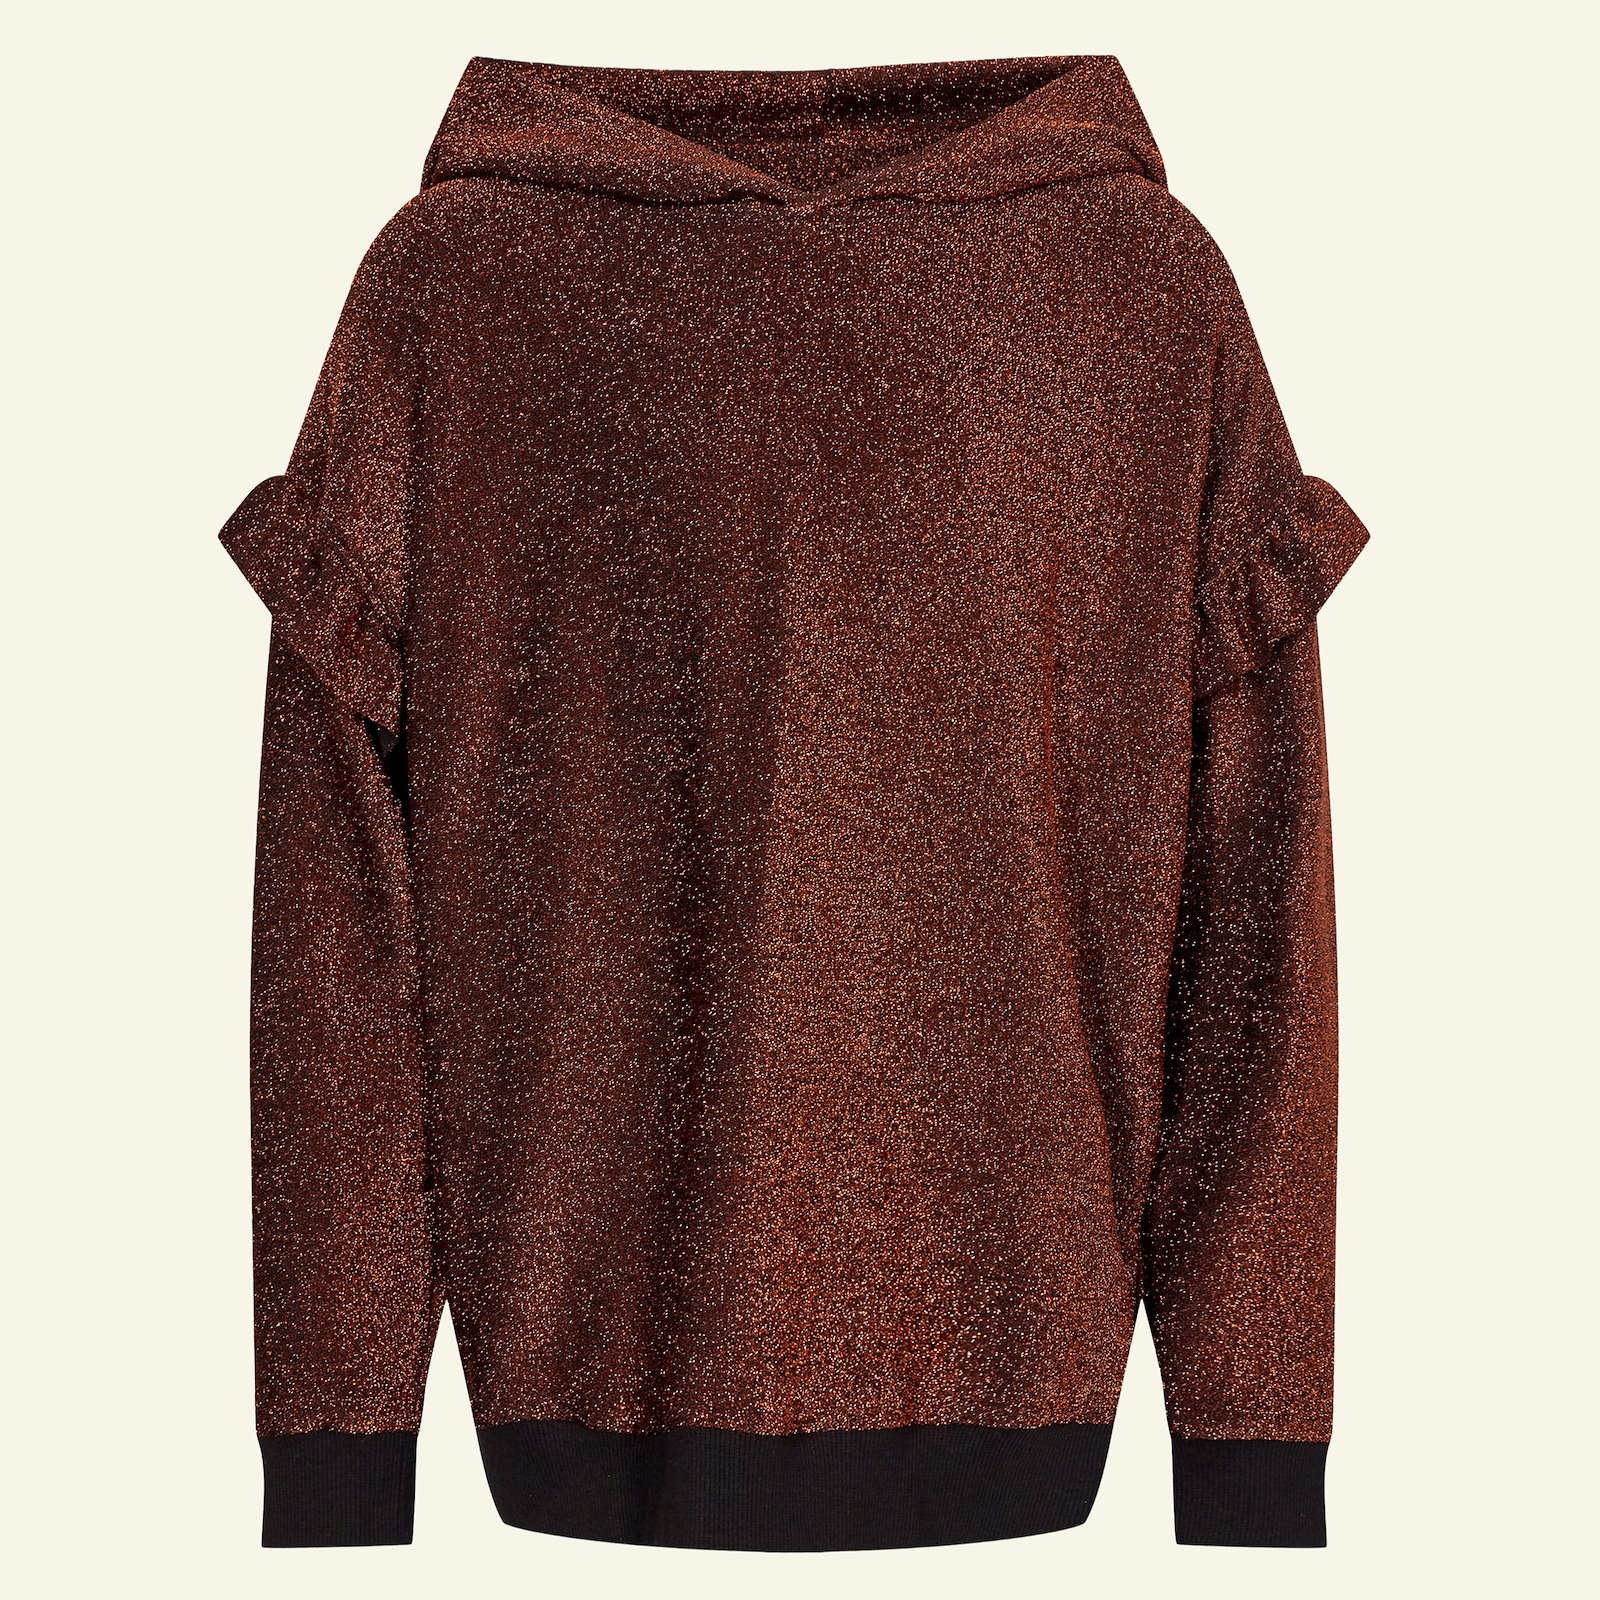 Sweatshirt w. hood + pocket, 110/5y p62020_272529_272436_sskit